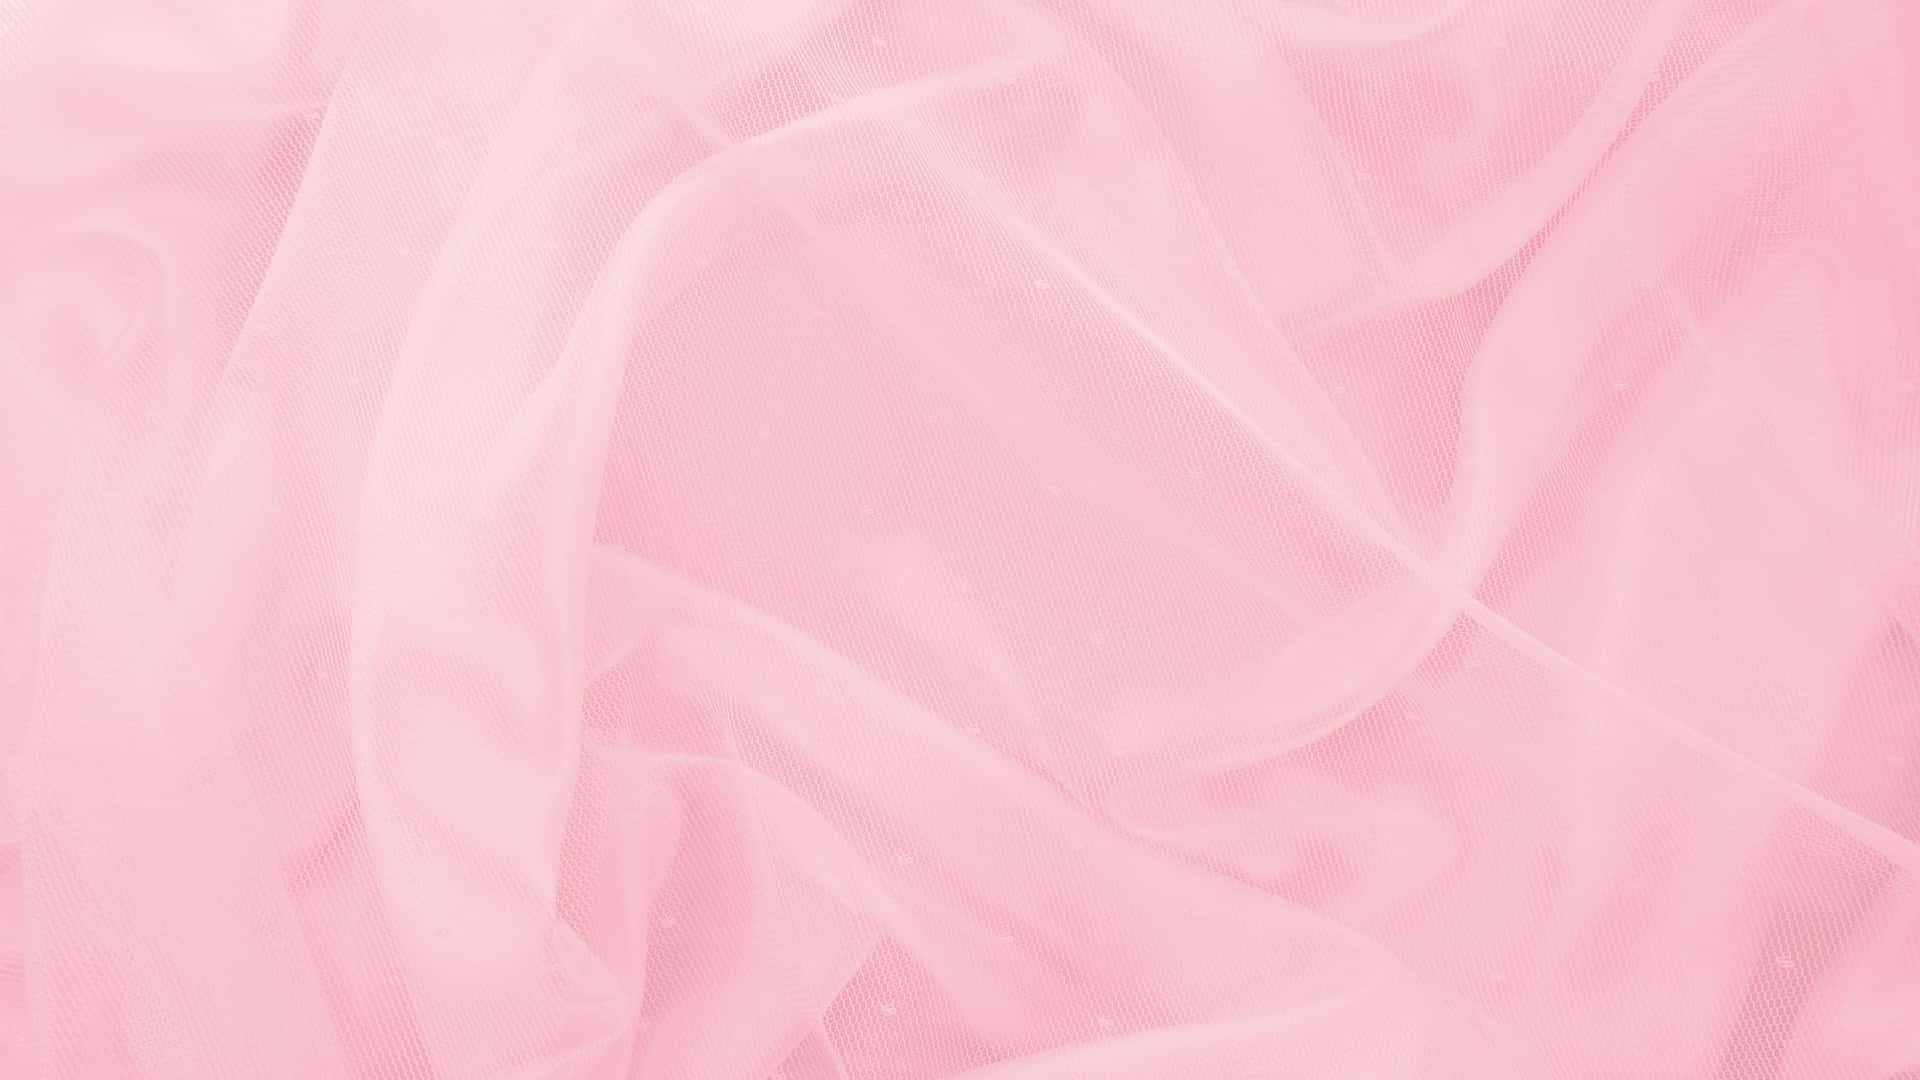 Aesthetic Computer Light Pink Sheer Fabric Wallpaper